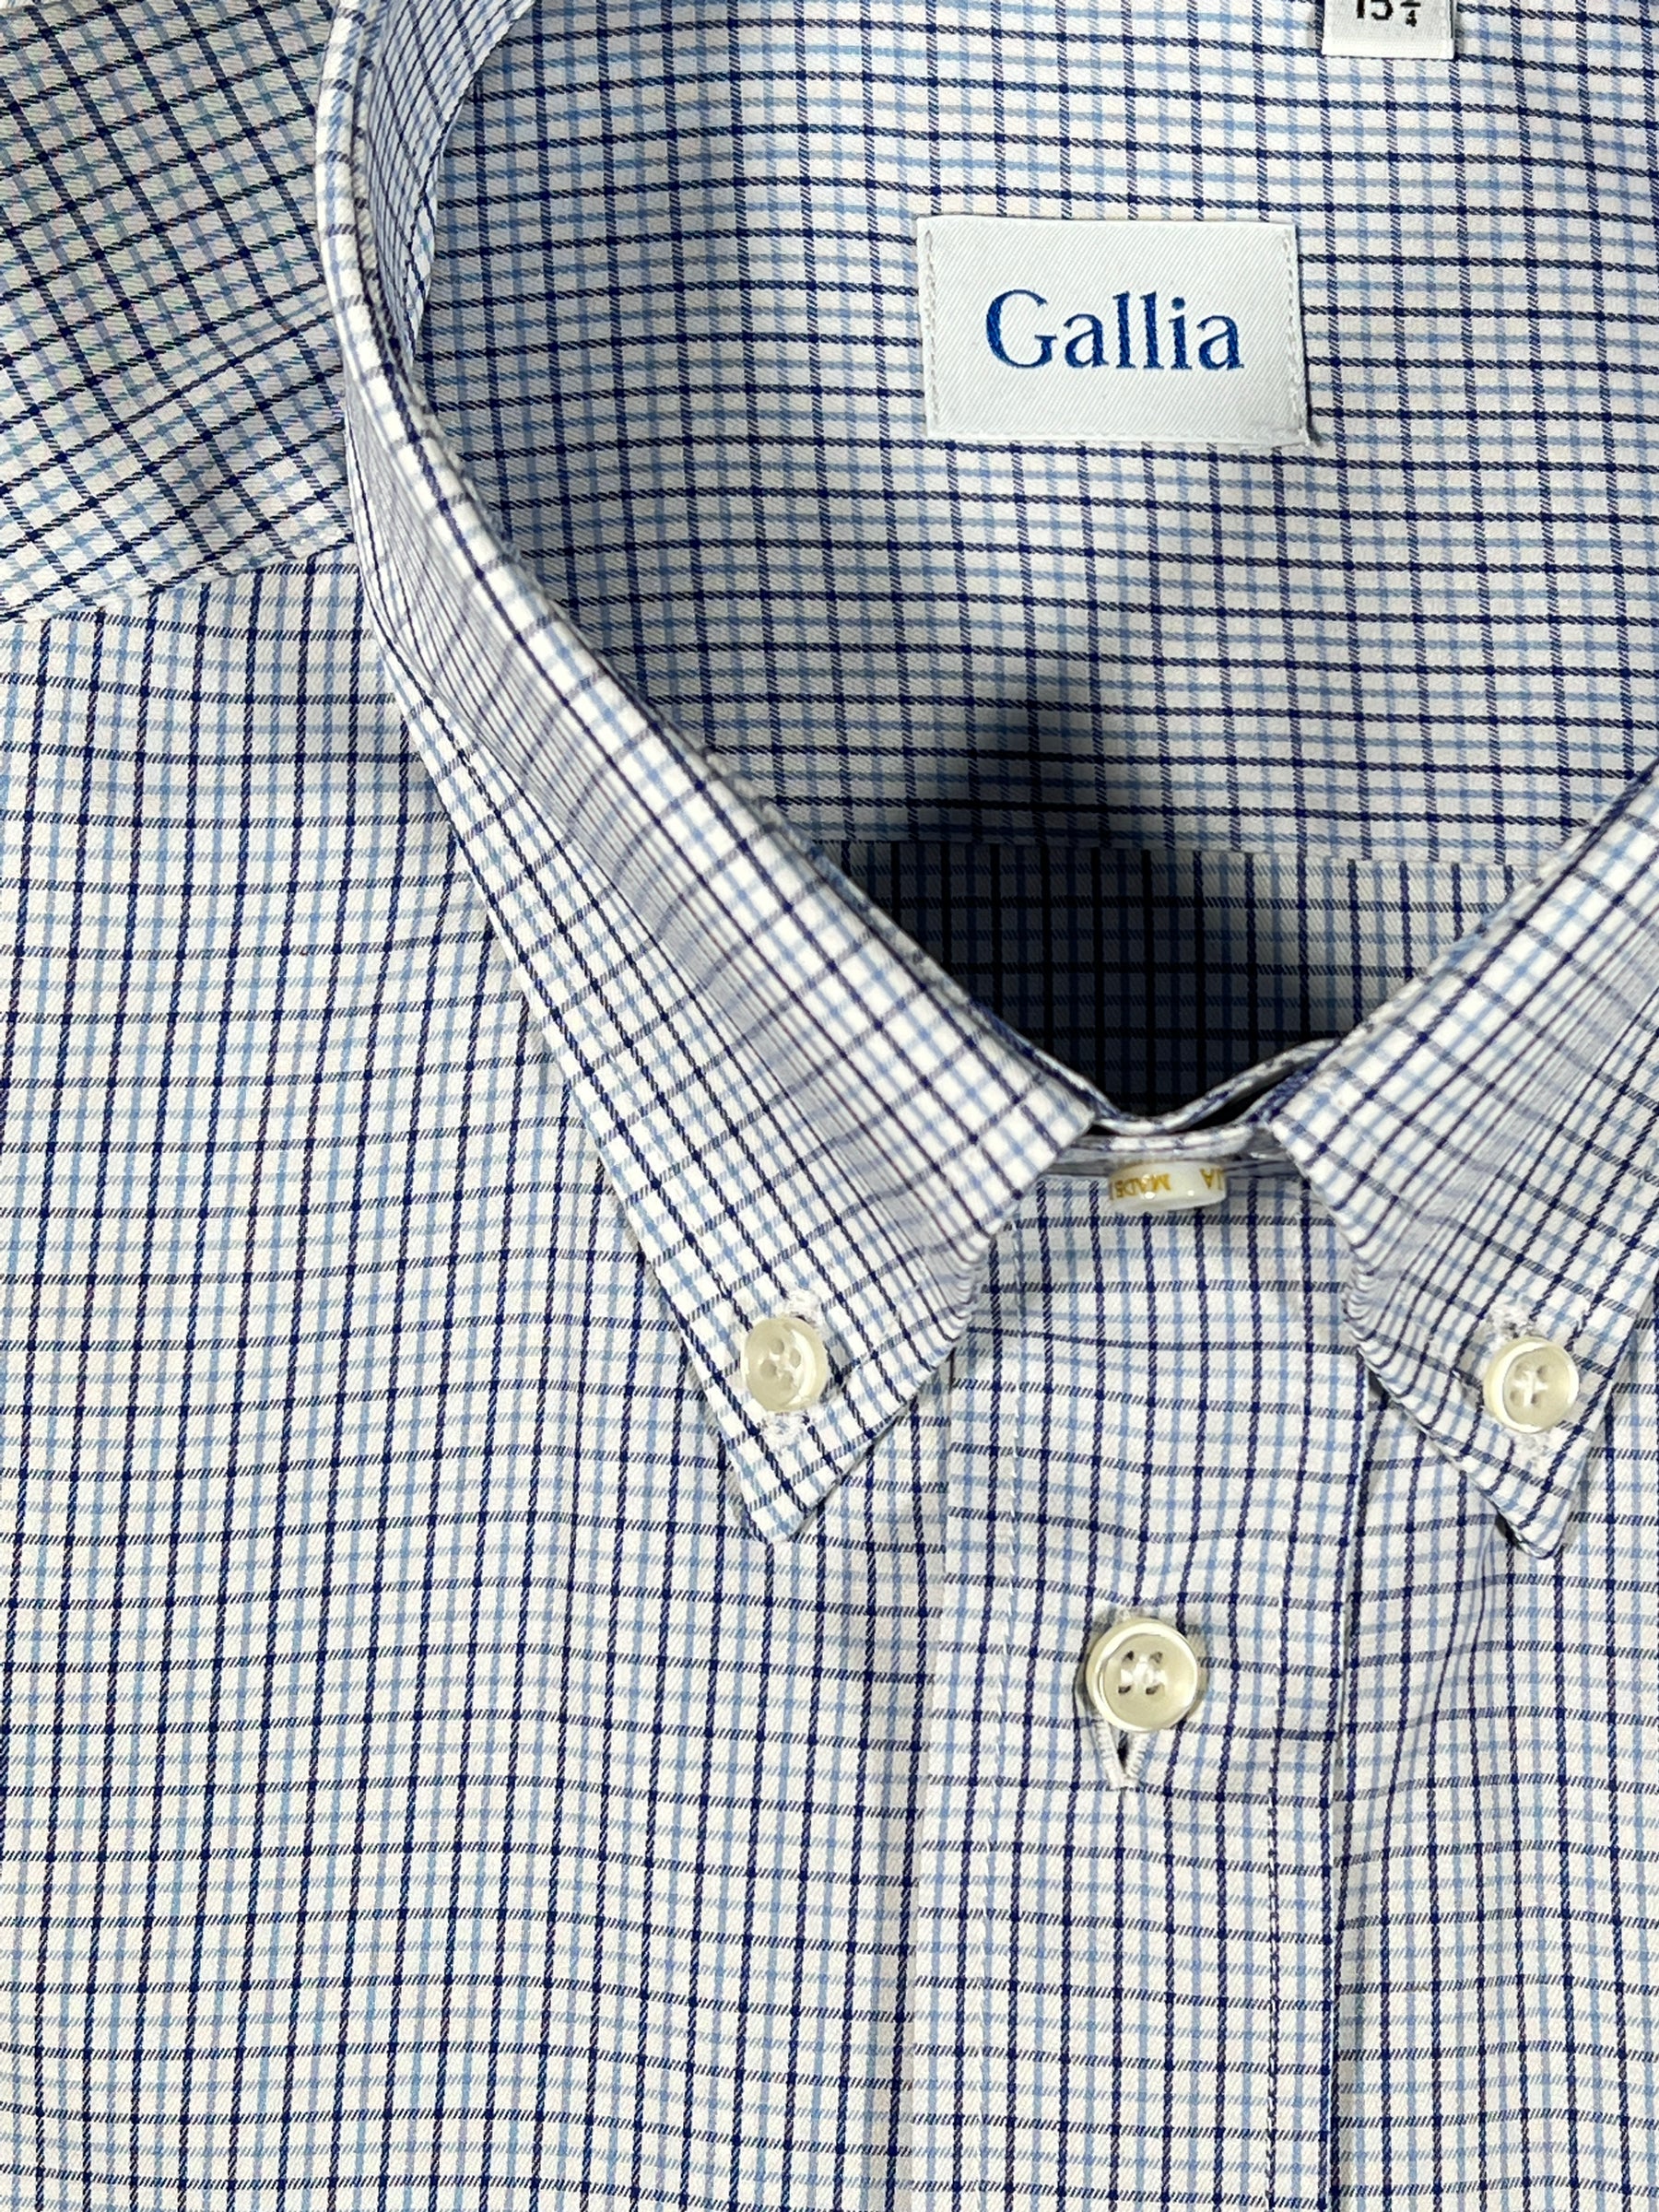 GALLIA MEN'S SHIRT - BLUE CHECK